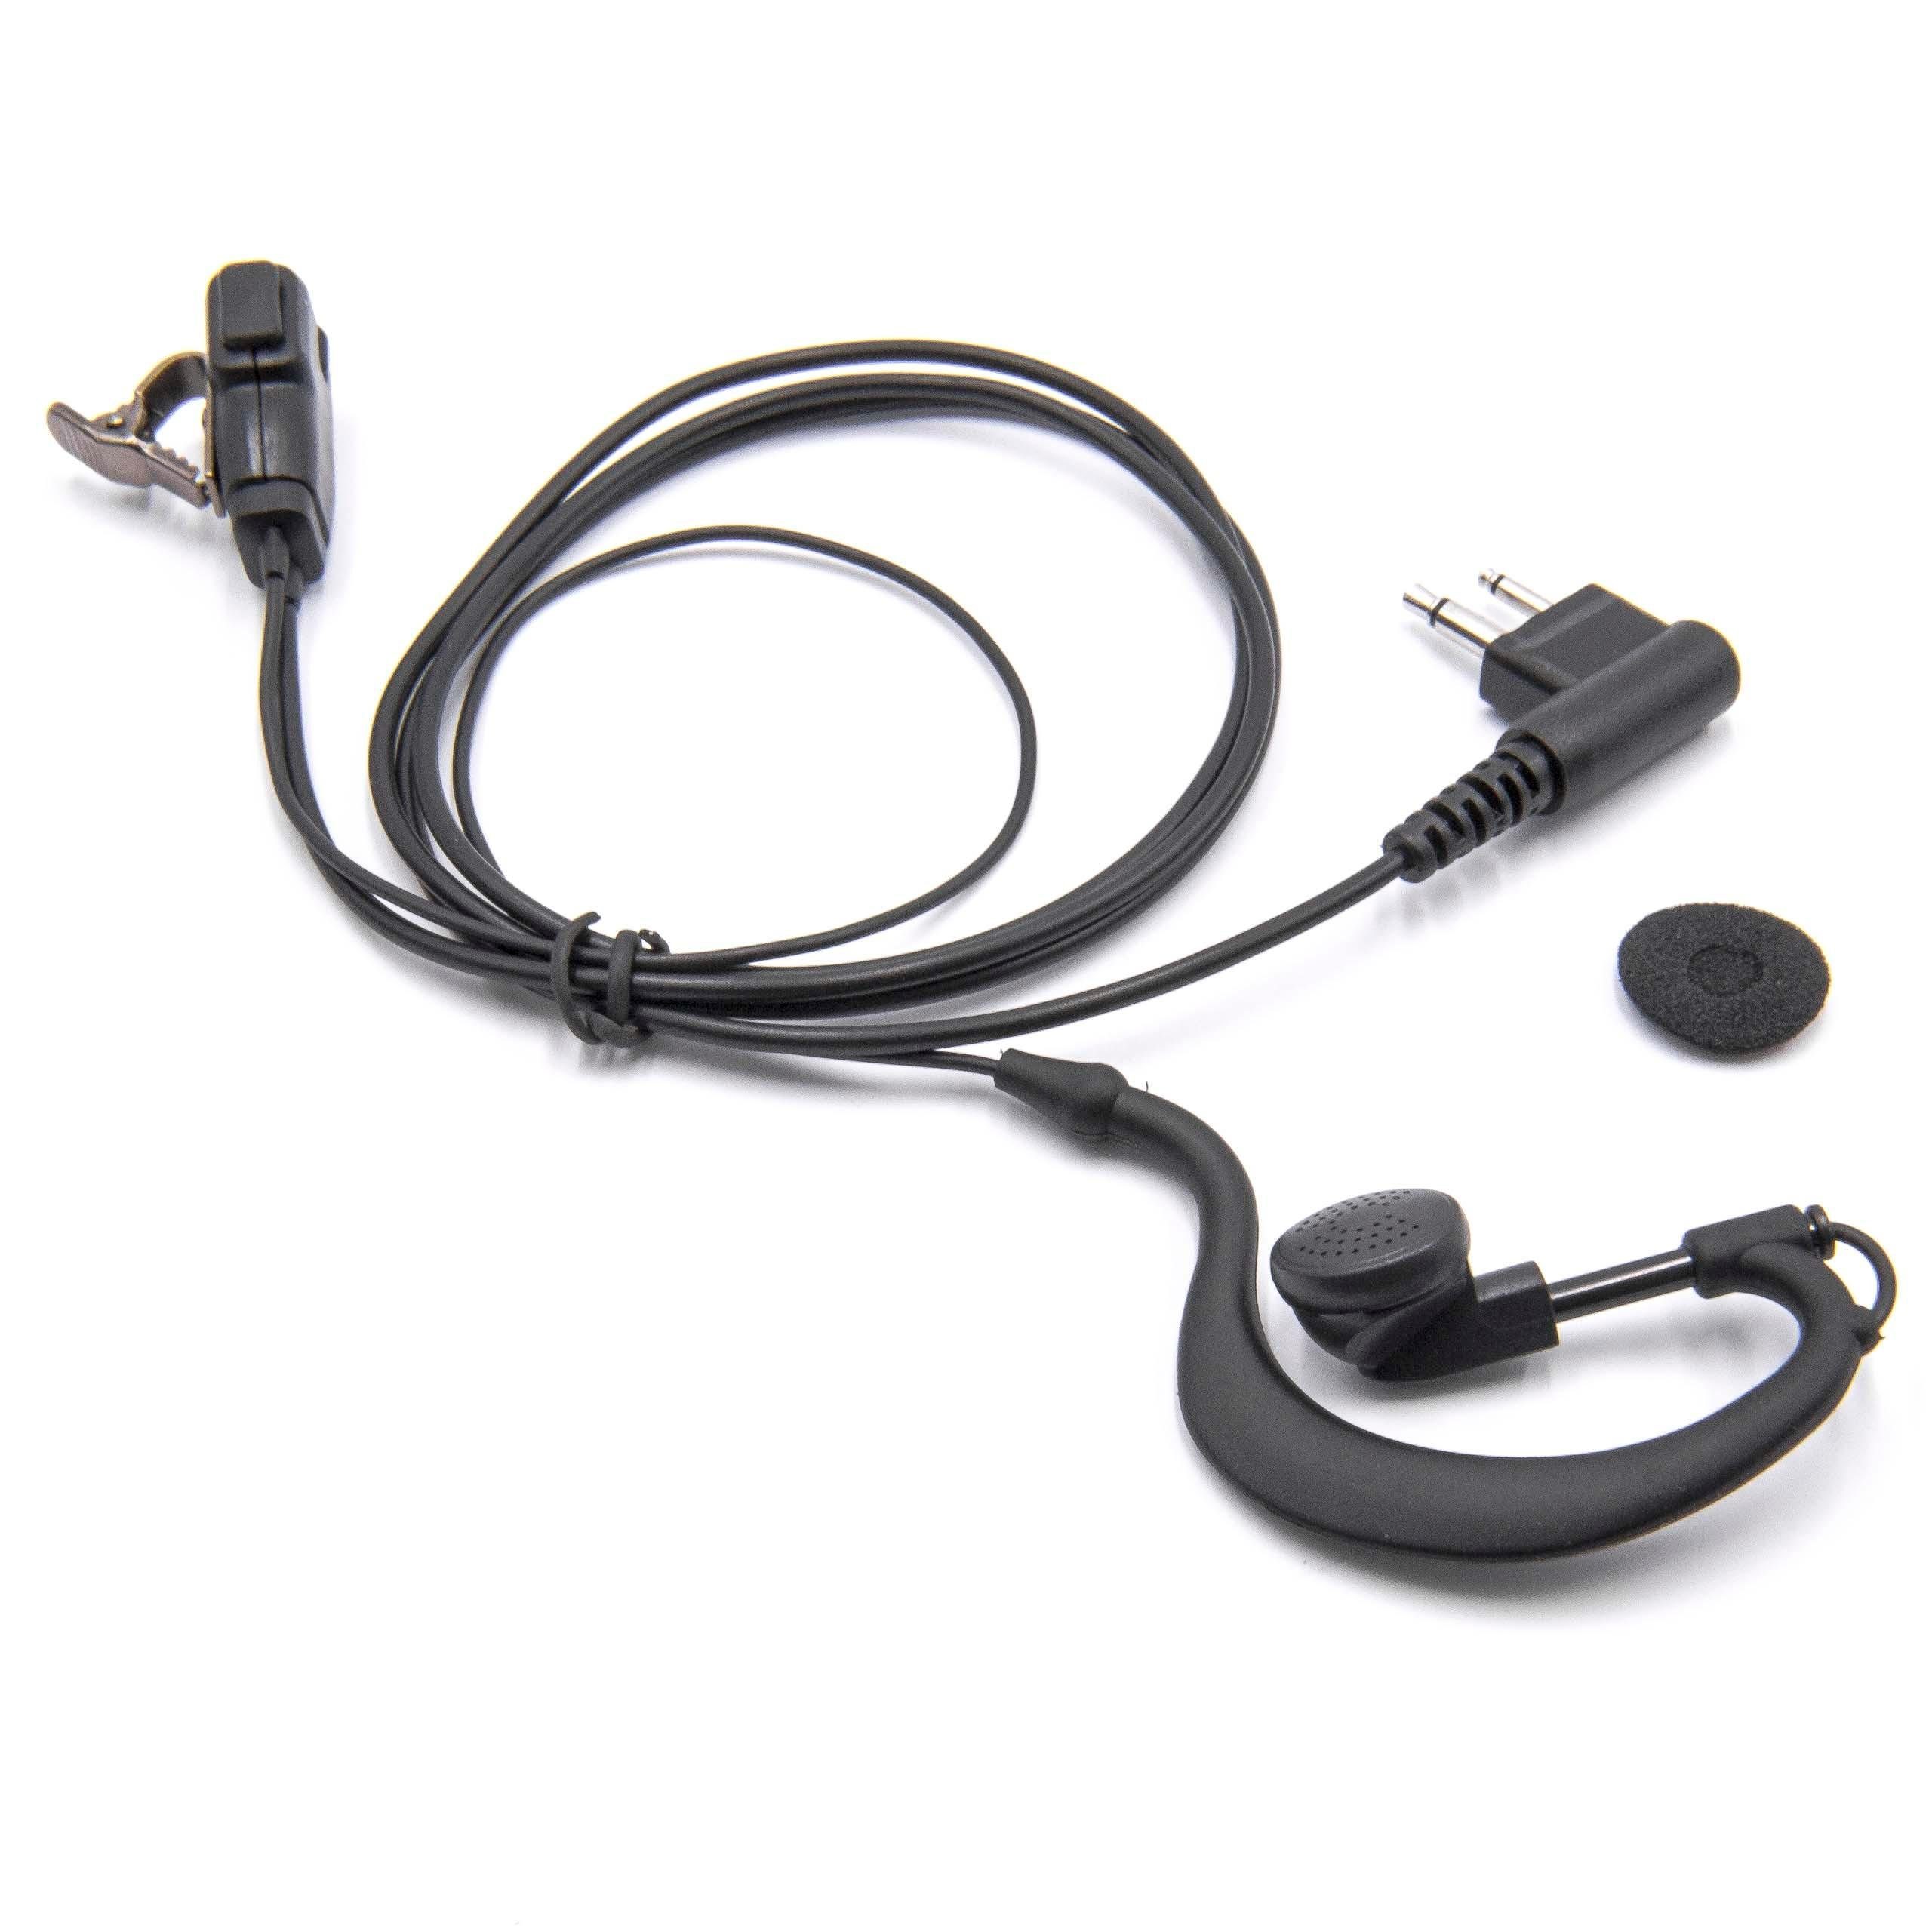 vhbw passend für Motorola Radius P110 Funkgerät Headset | Kopfhörer